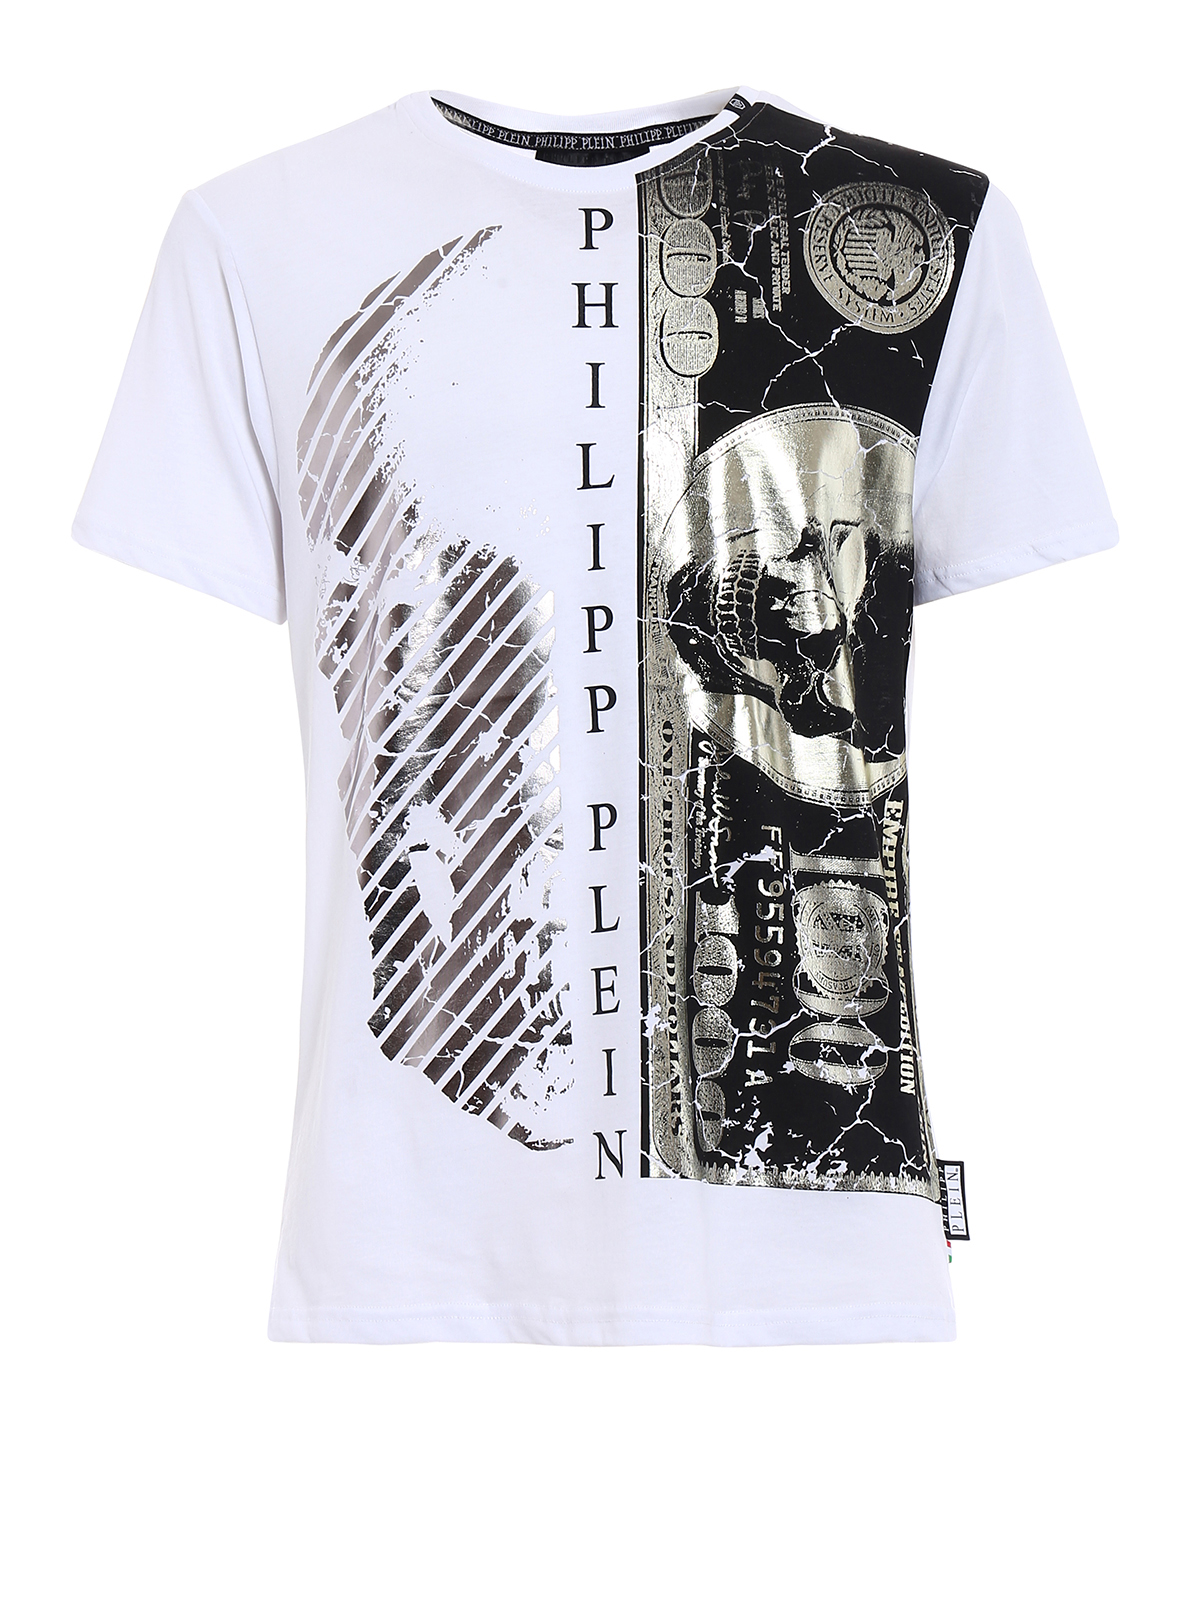 philipp plein shirt price